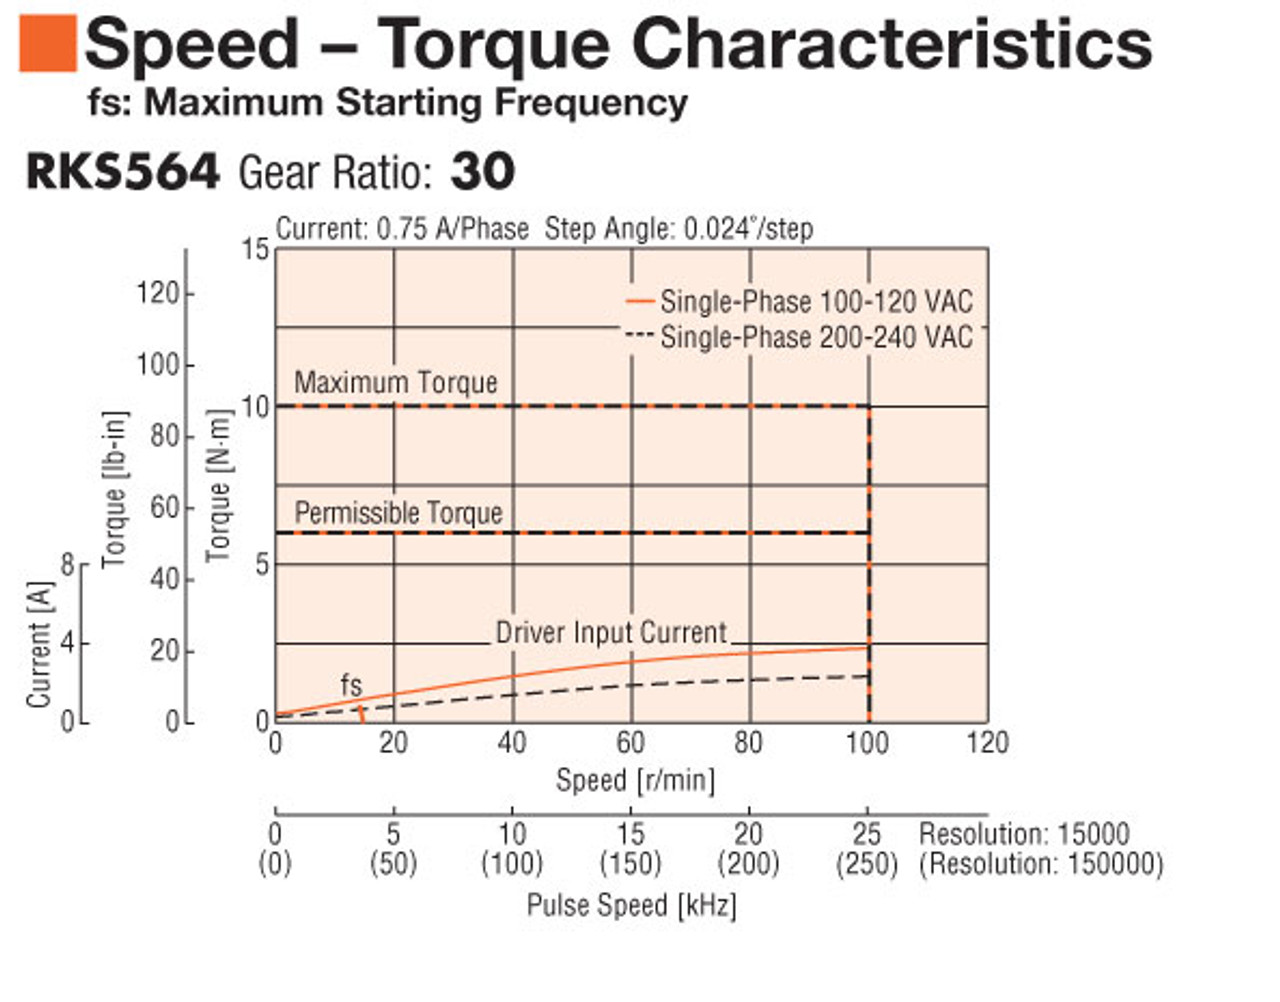 PKE564AC-TS30 - Speed-Torque